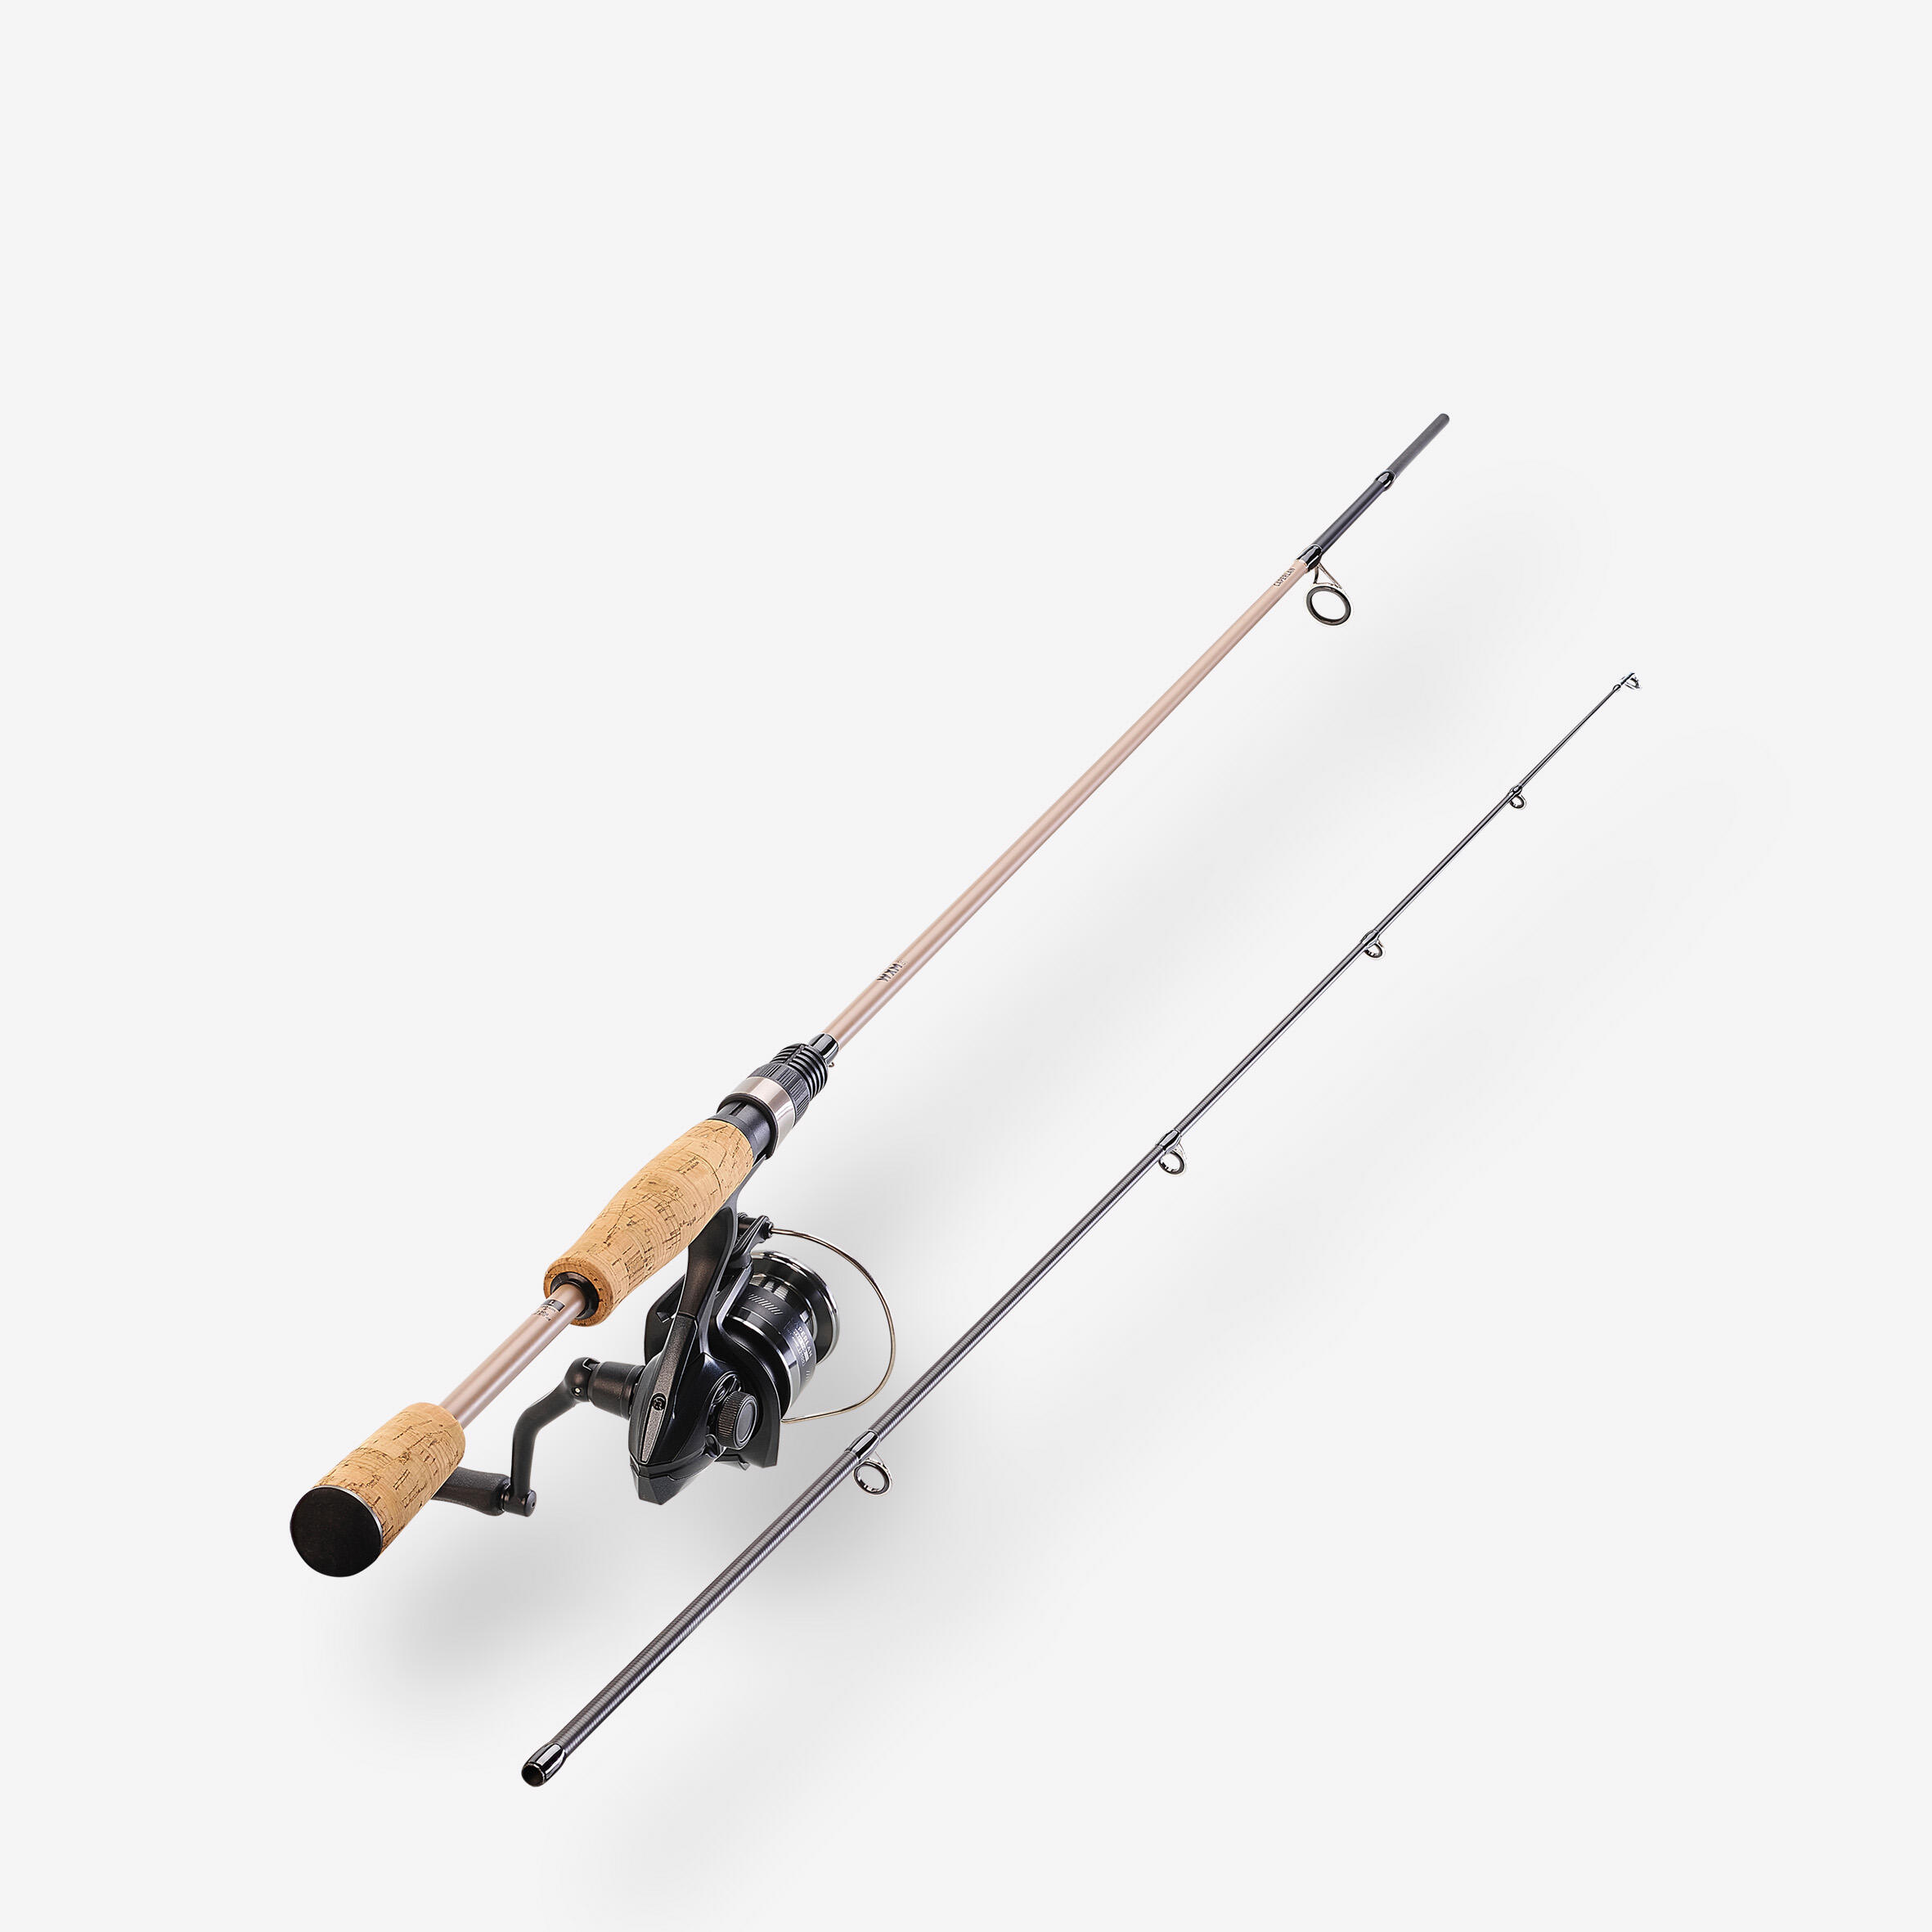 50%HOT 1 Set FLY Outdoor Fishing Spinning Rod Handle Wheel Reel